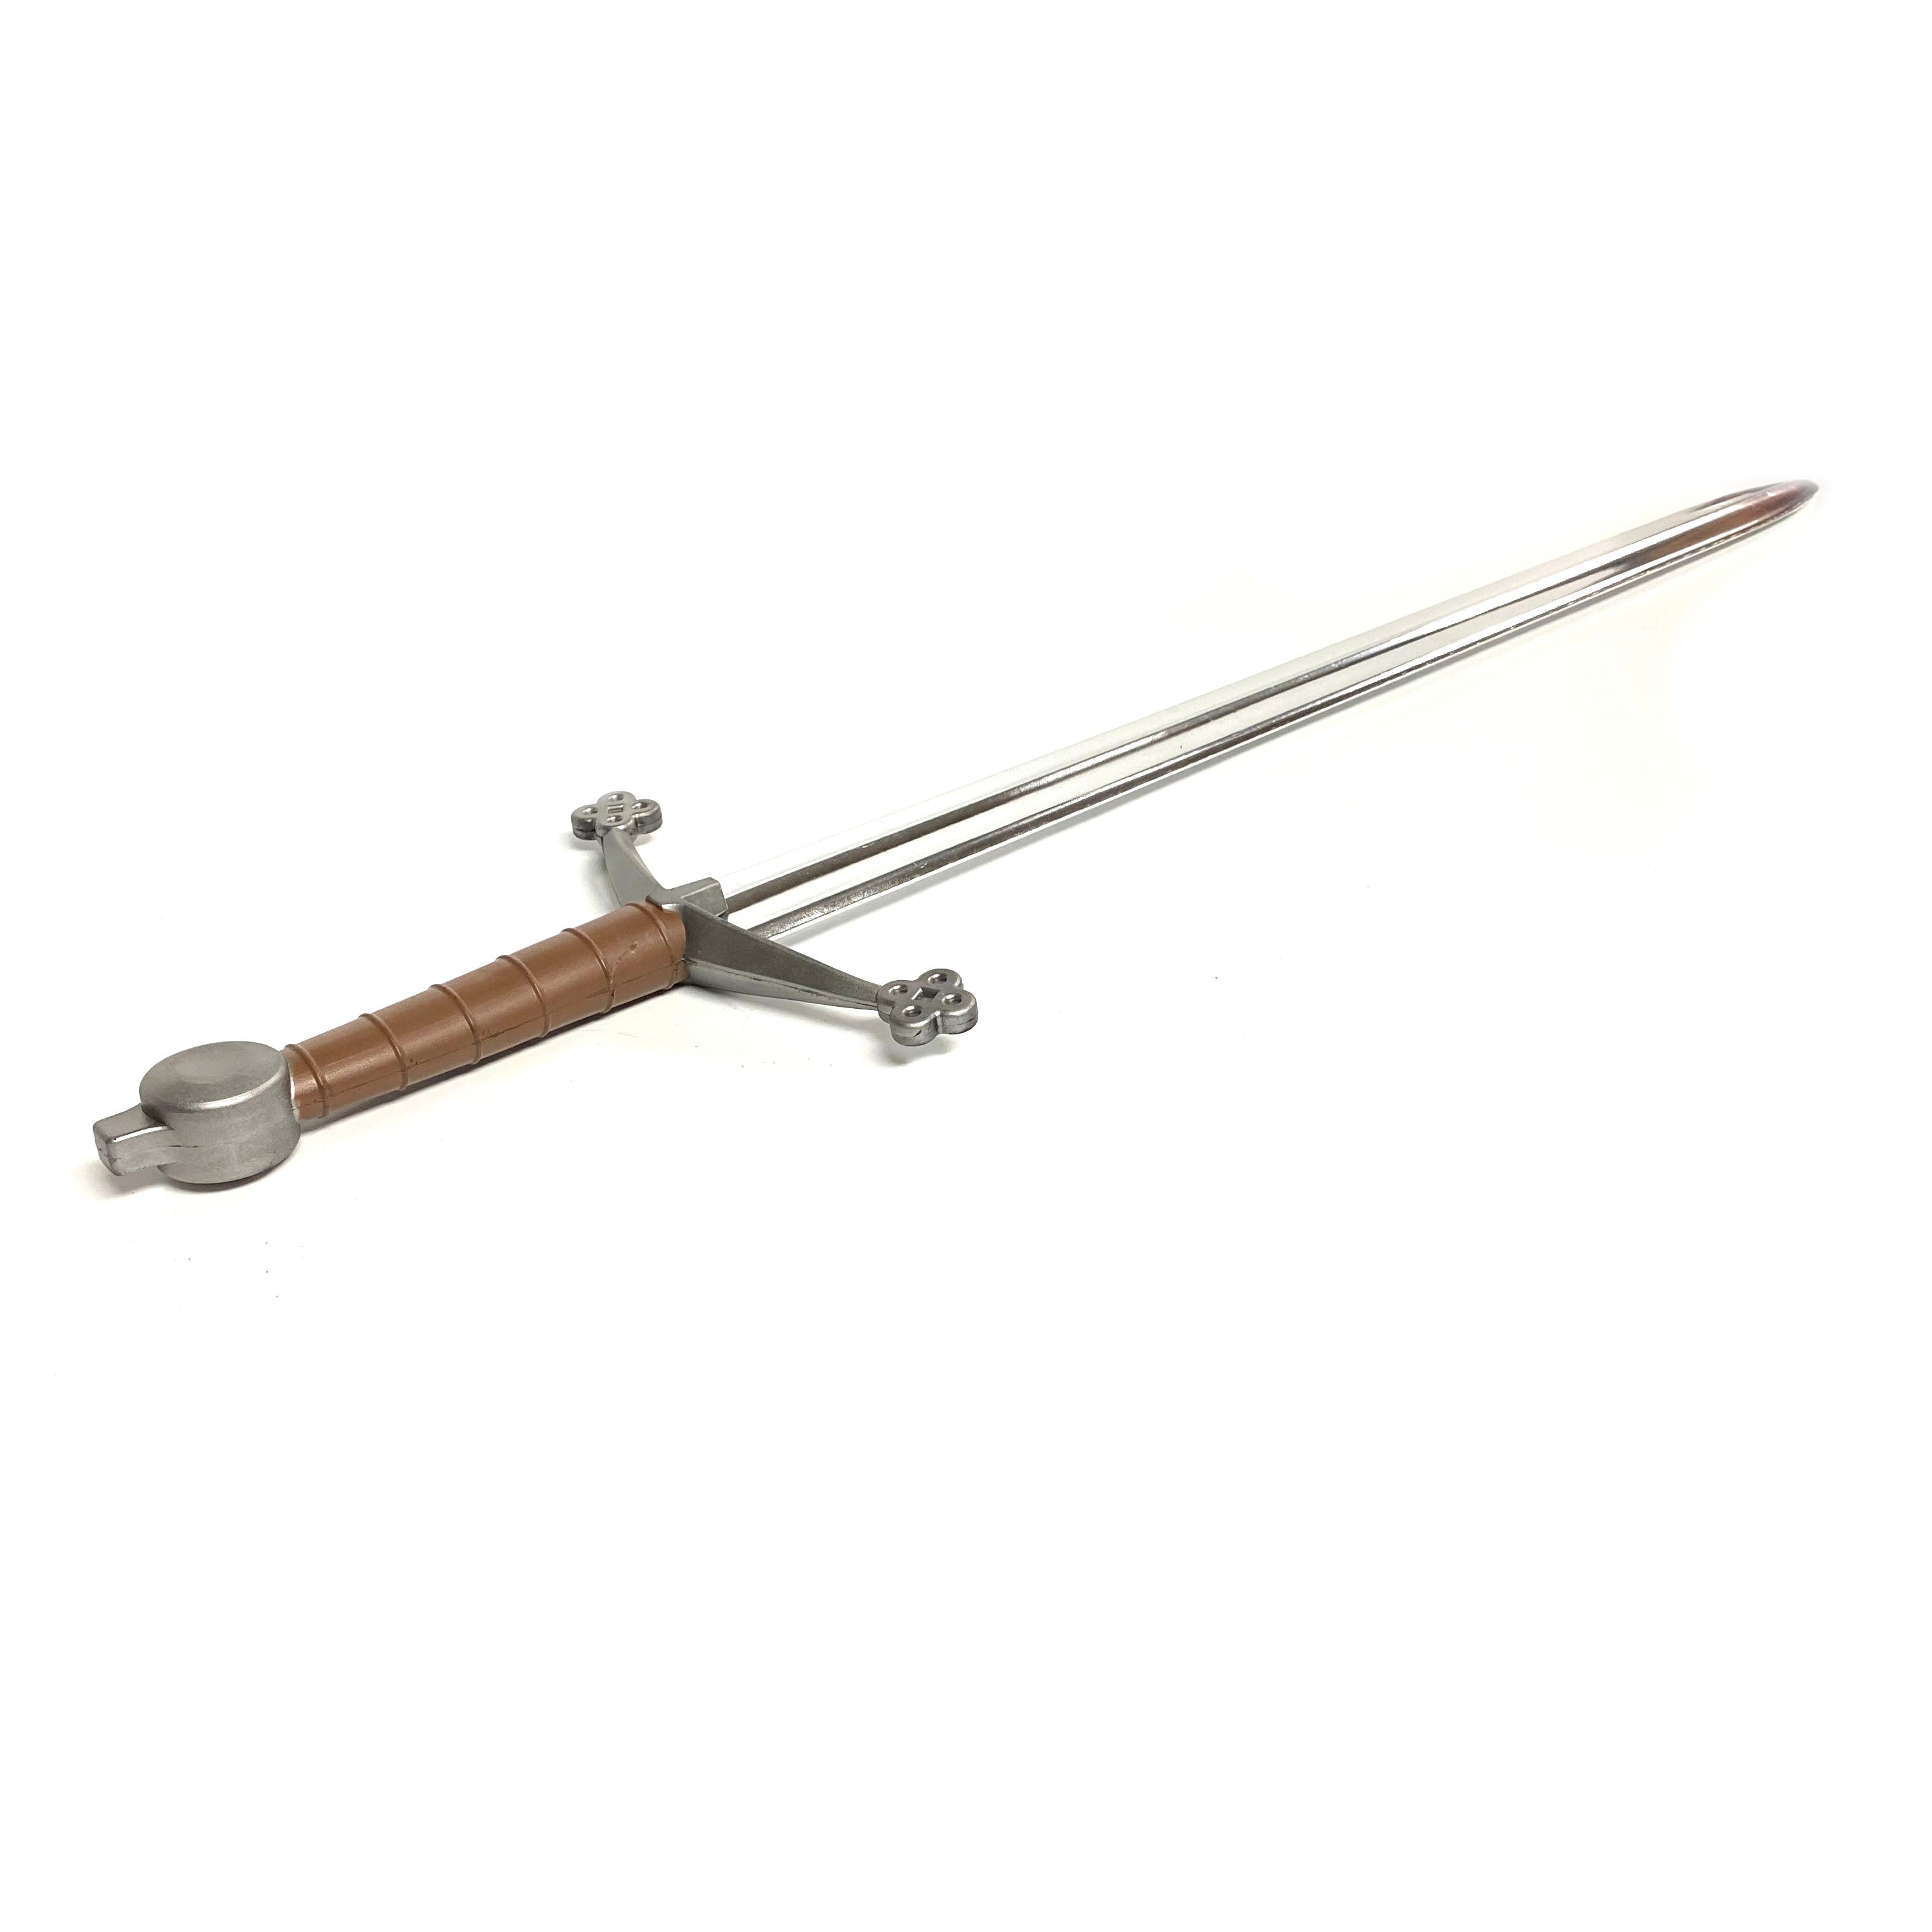 Lightweight Foam Chrome Medieval Sword - All Brown Handle